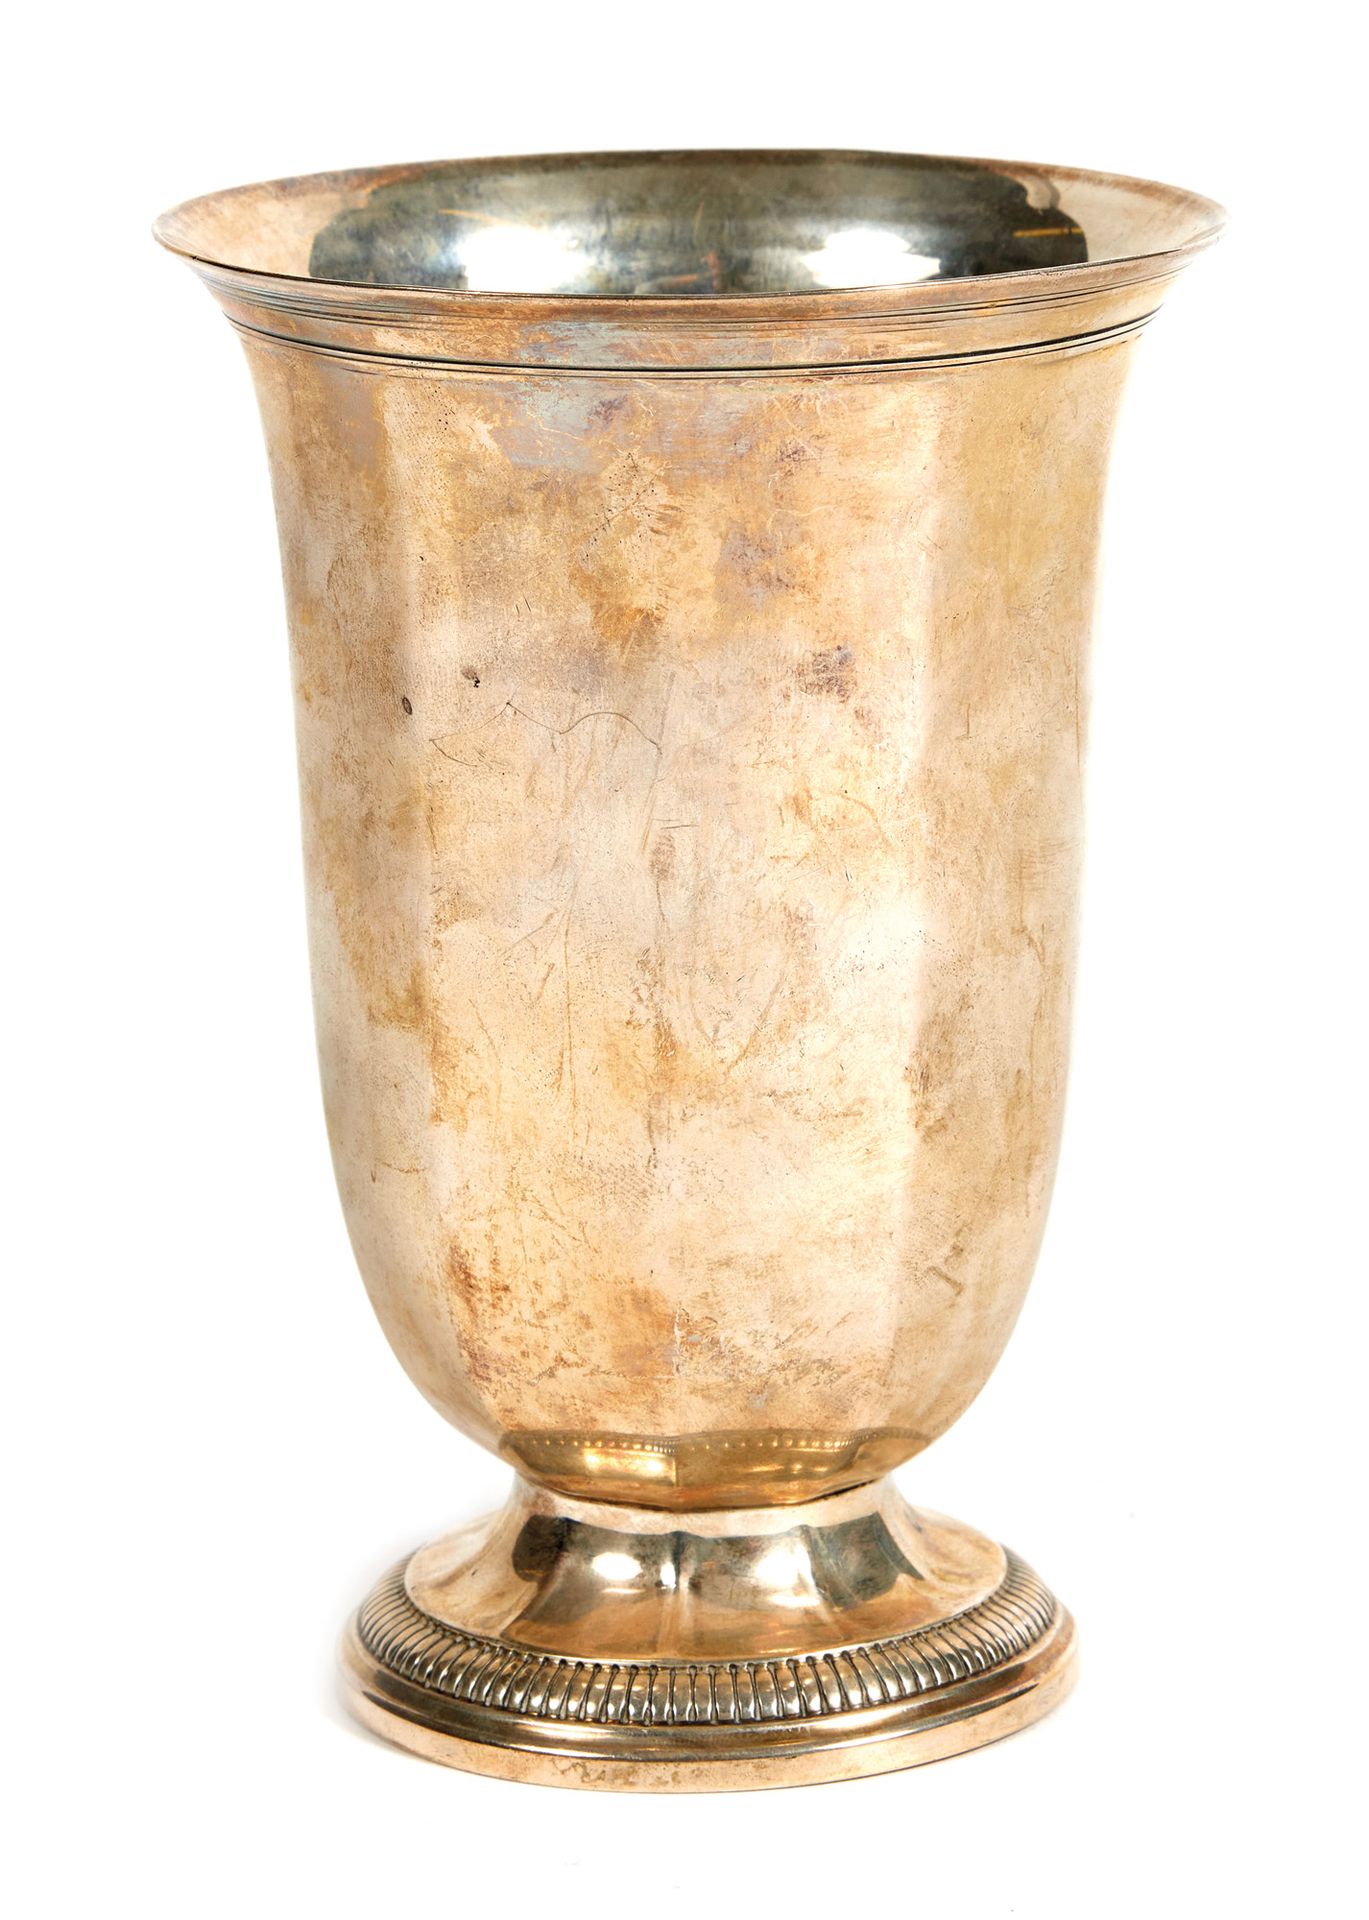 TIMBALE TULIPE EN ARGENT 银色的郁金香杯

Rehung的标志